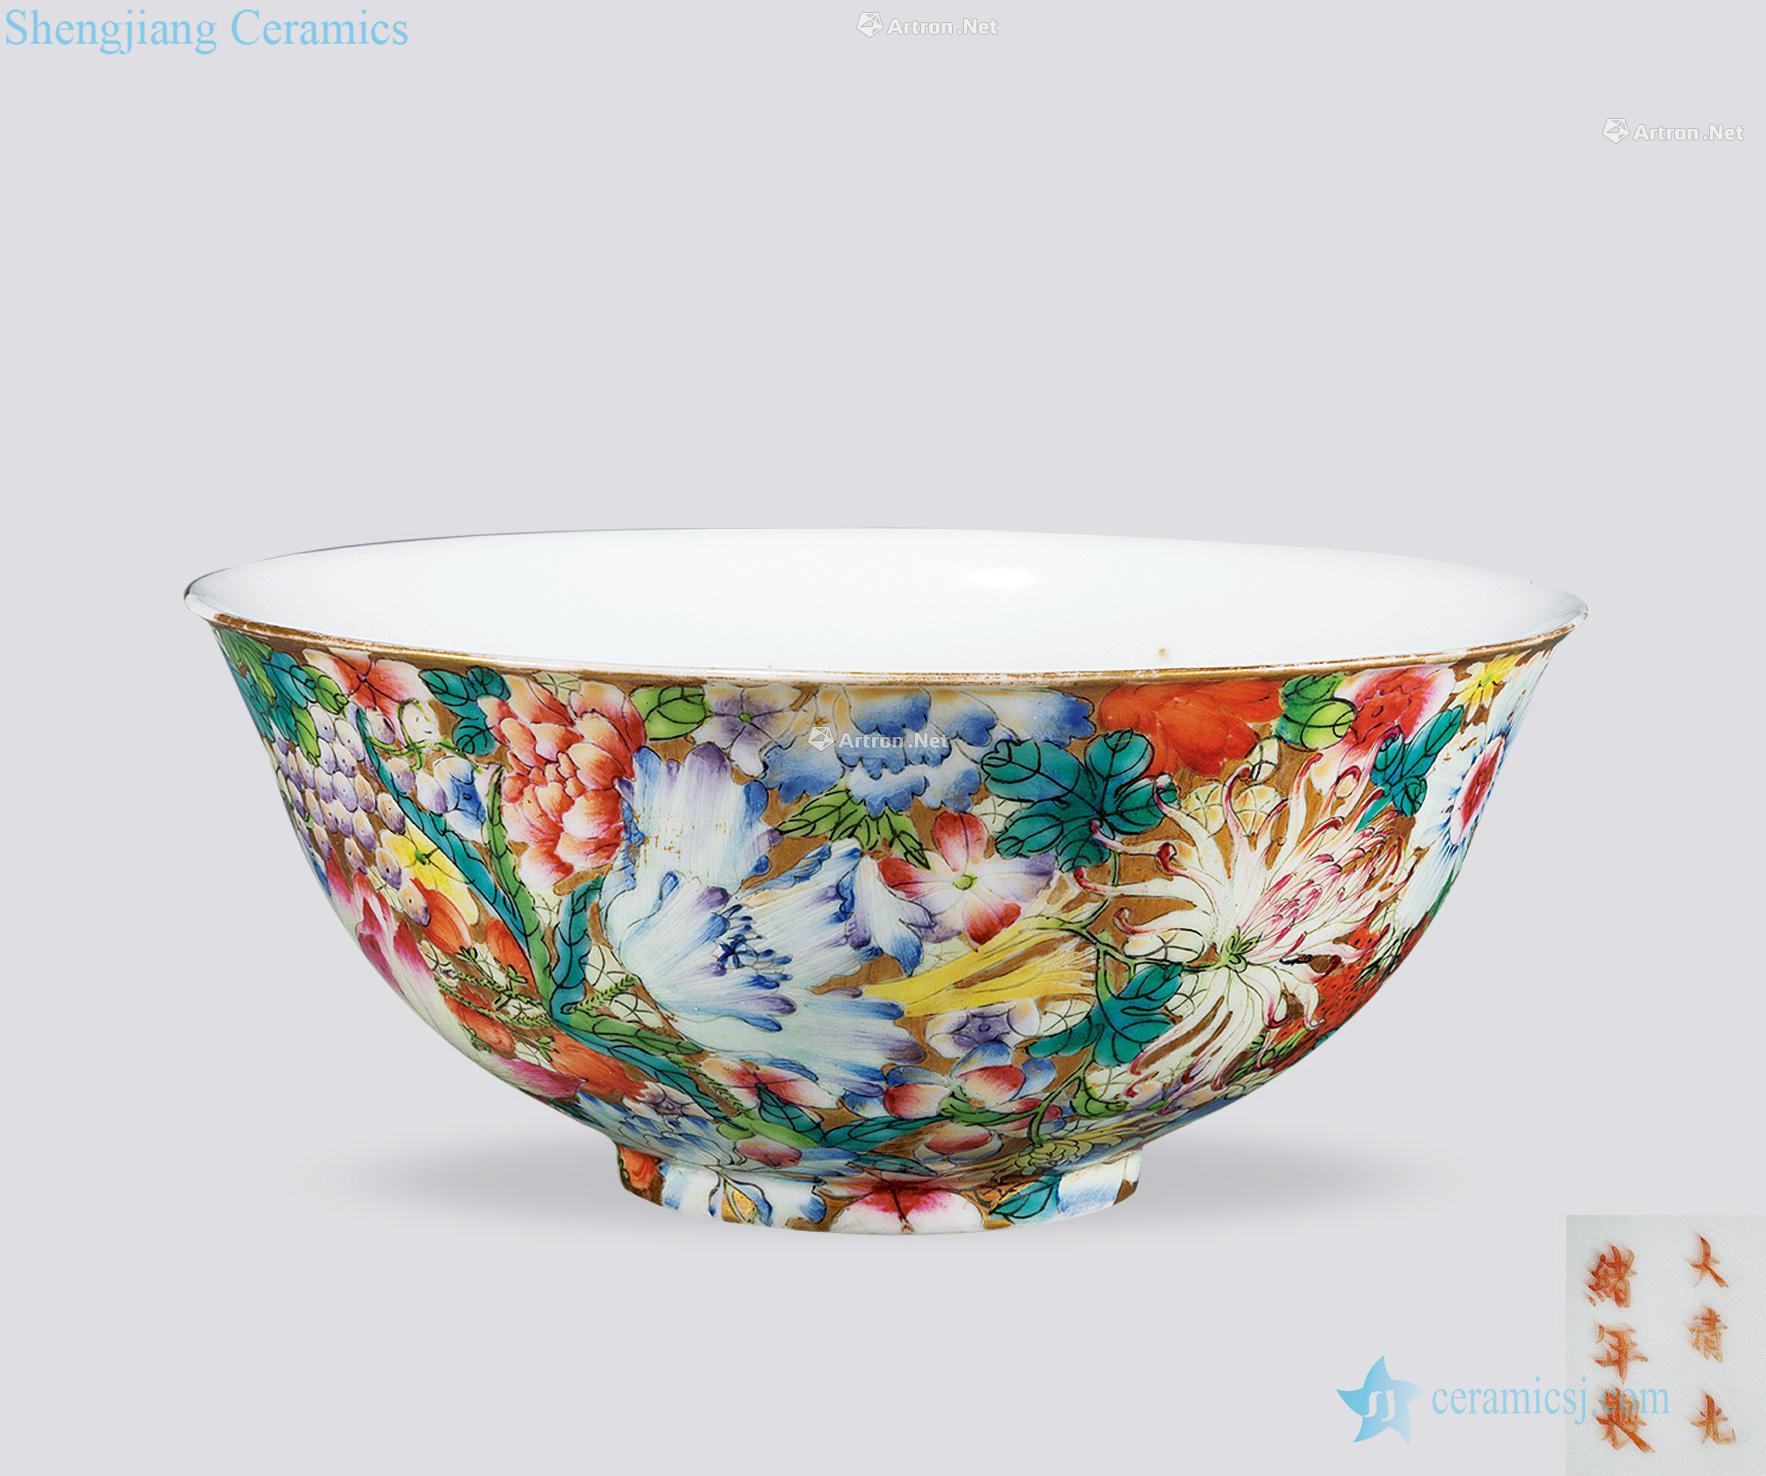 Pastel flowers reign of qing emperor guangxu bowl